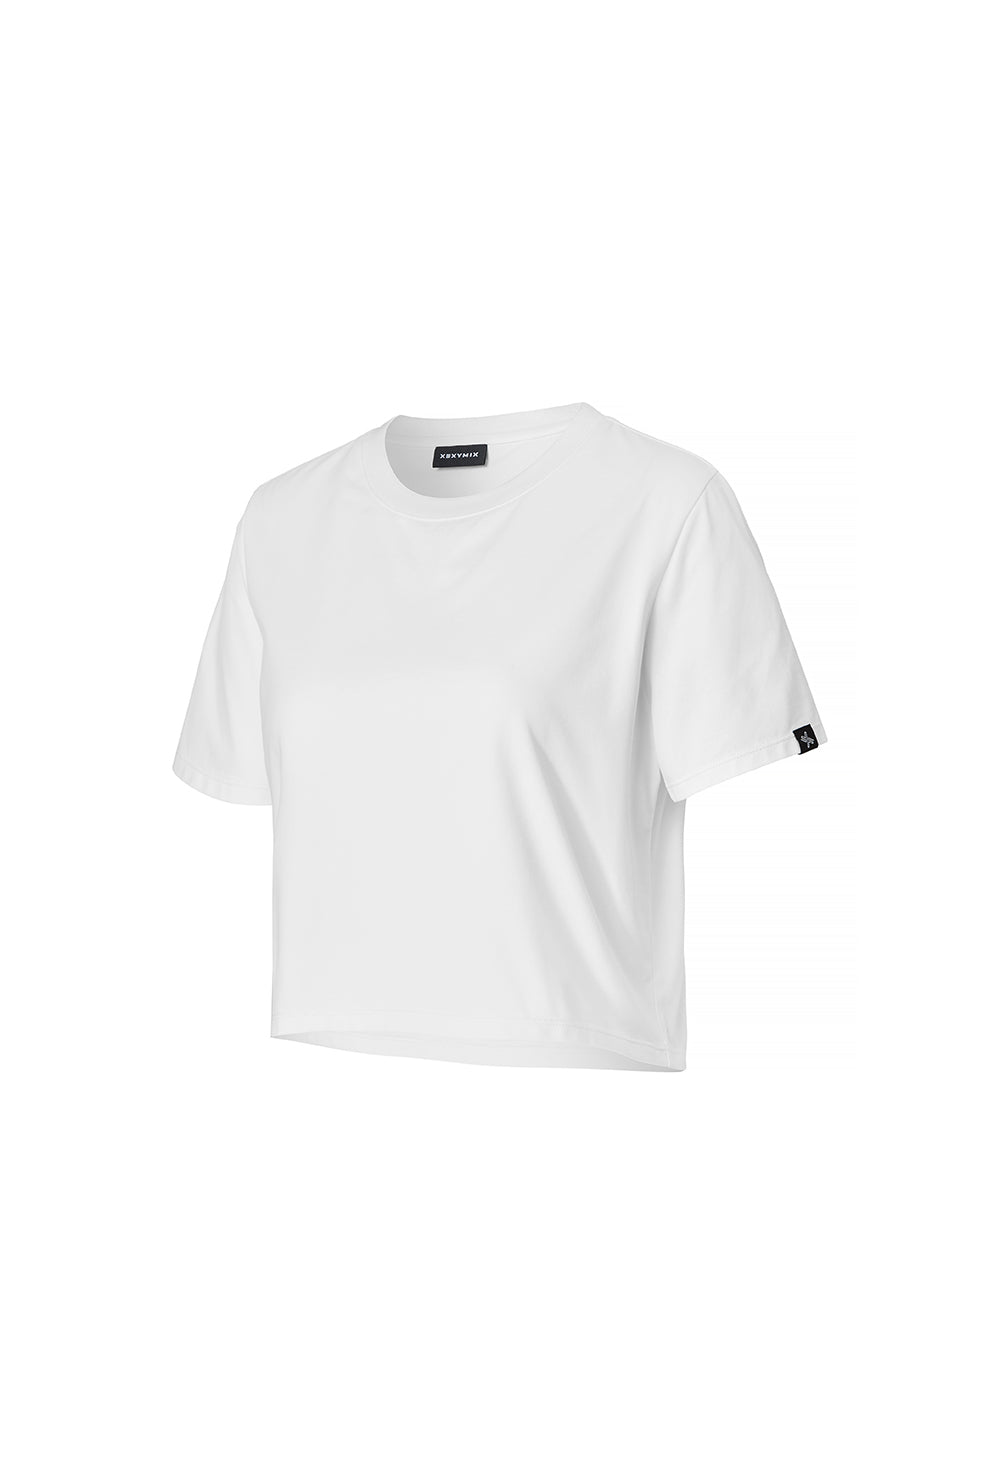 Basic Scratch Crop T-Shirt - Ivory